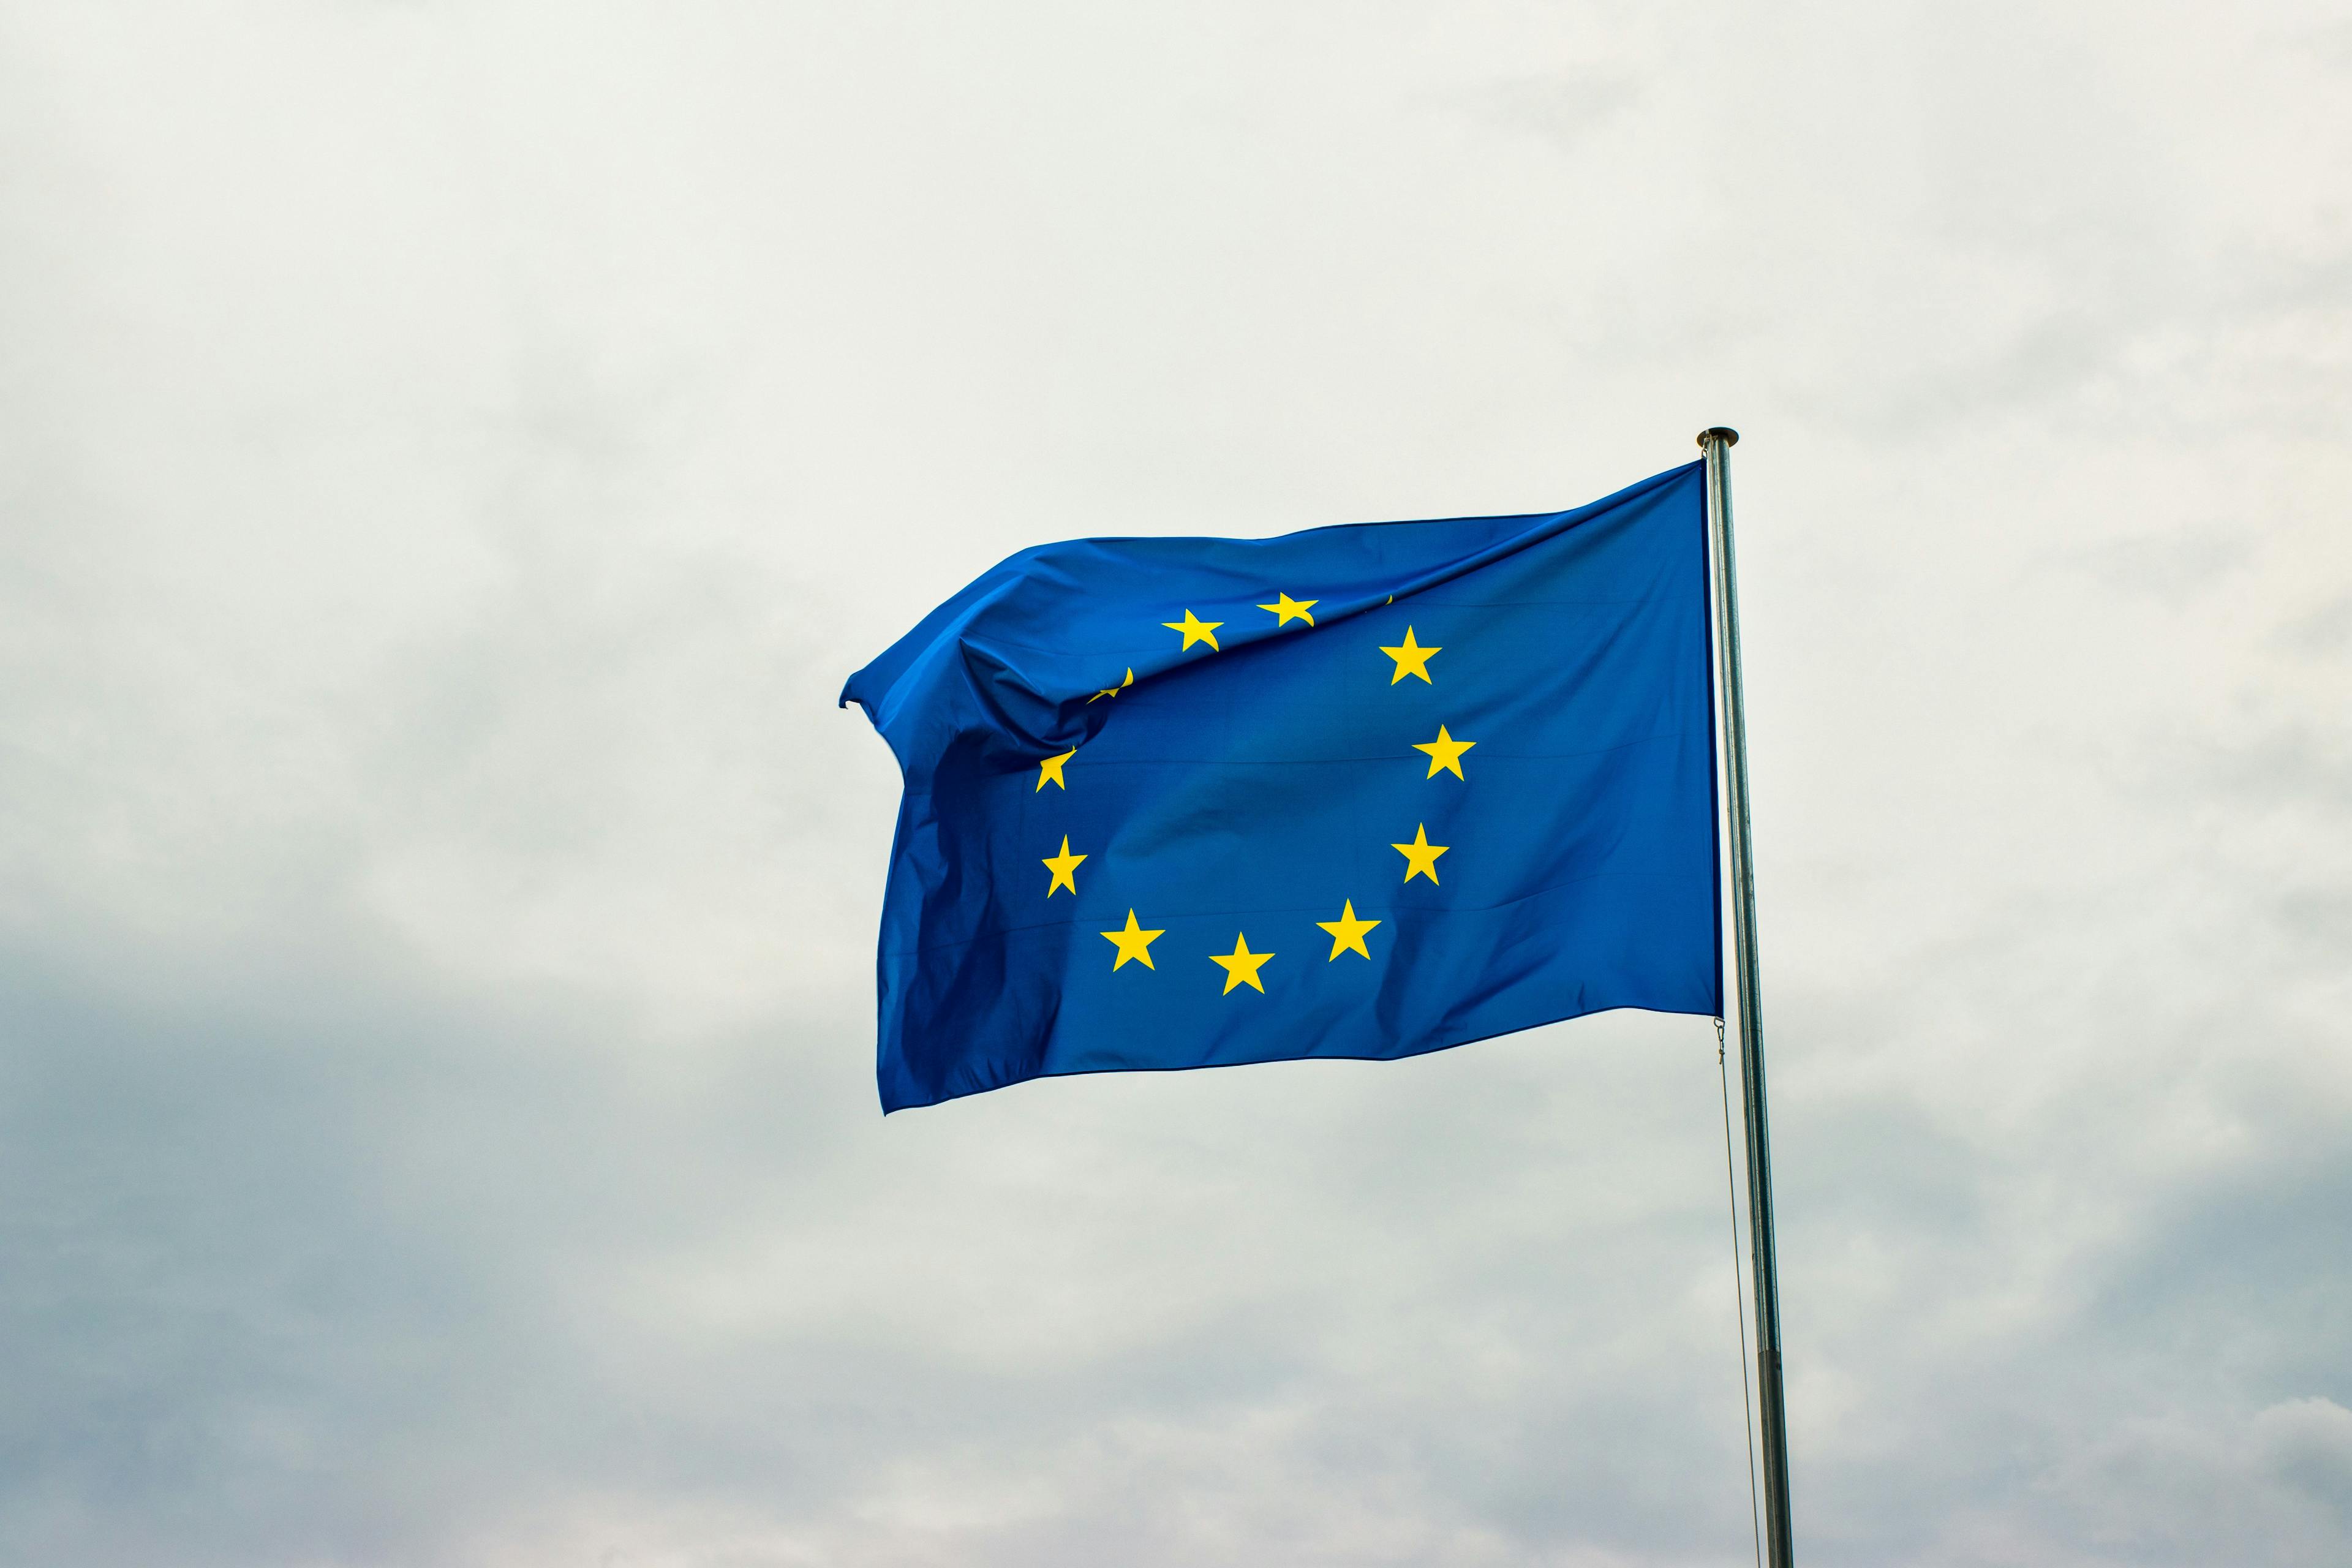 flag pole with EU flag